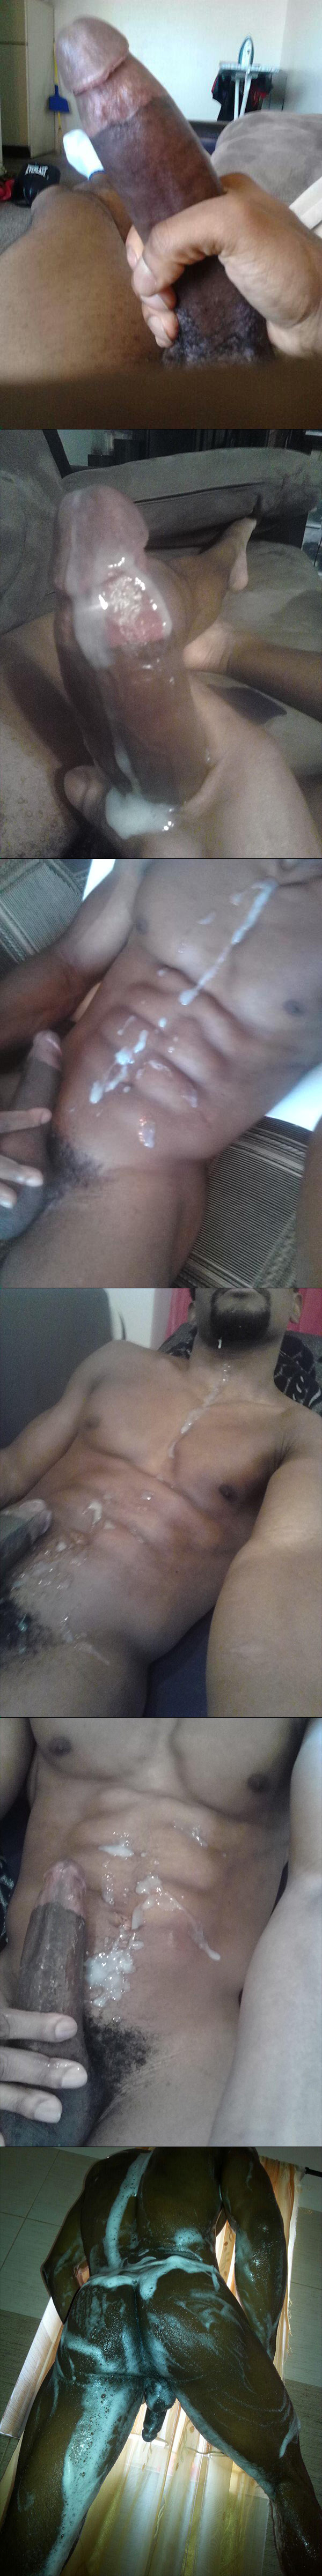 atk polish dr9inch webcam male big black cock black men solo gay porn (1)